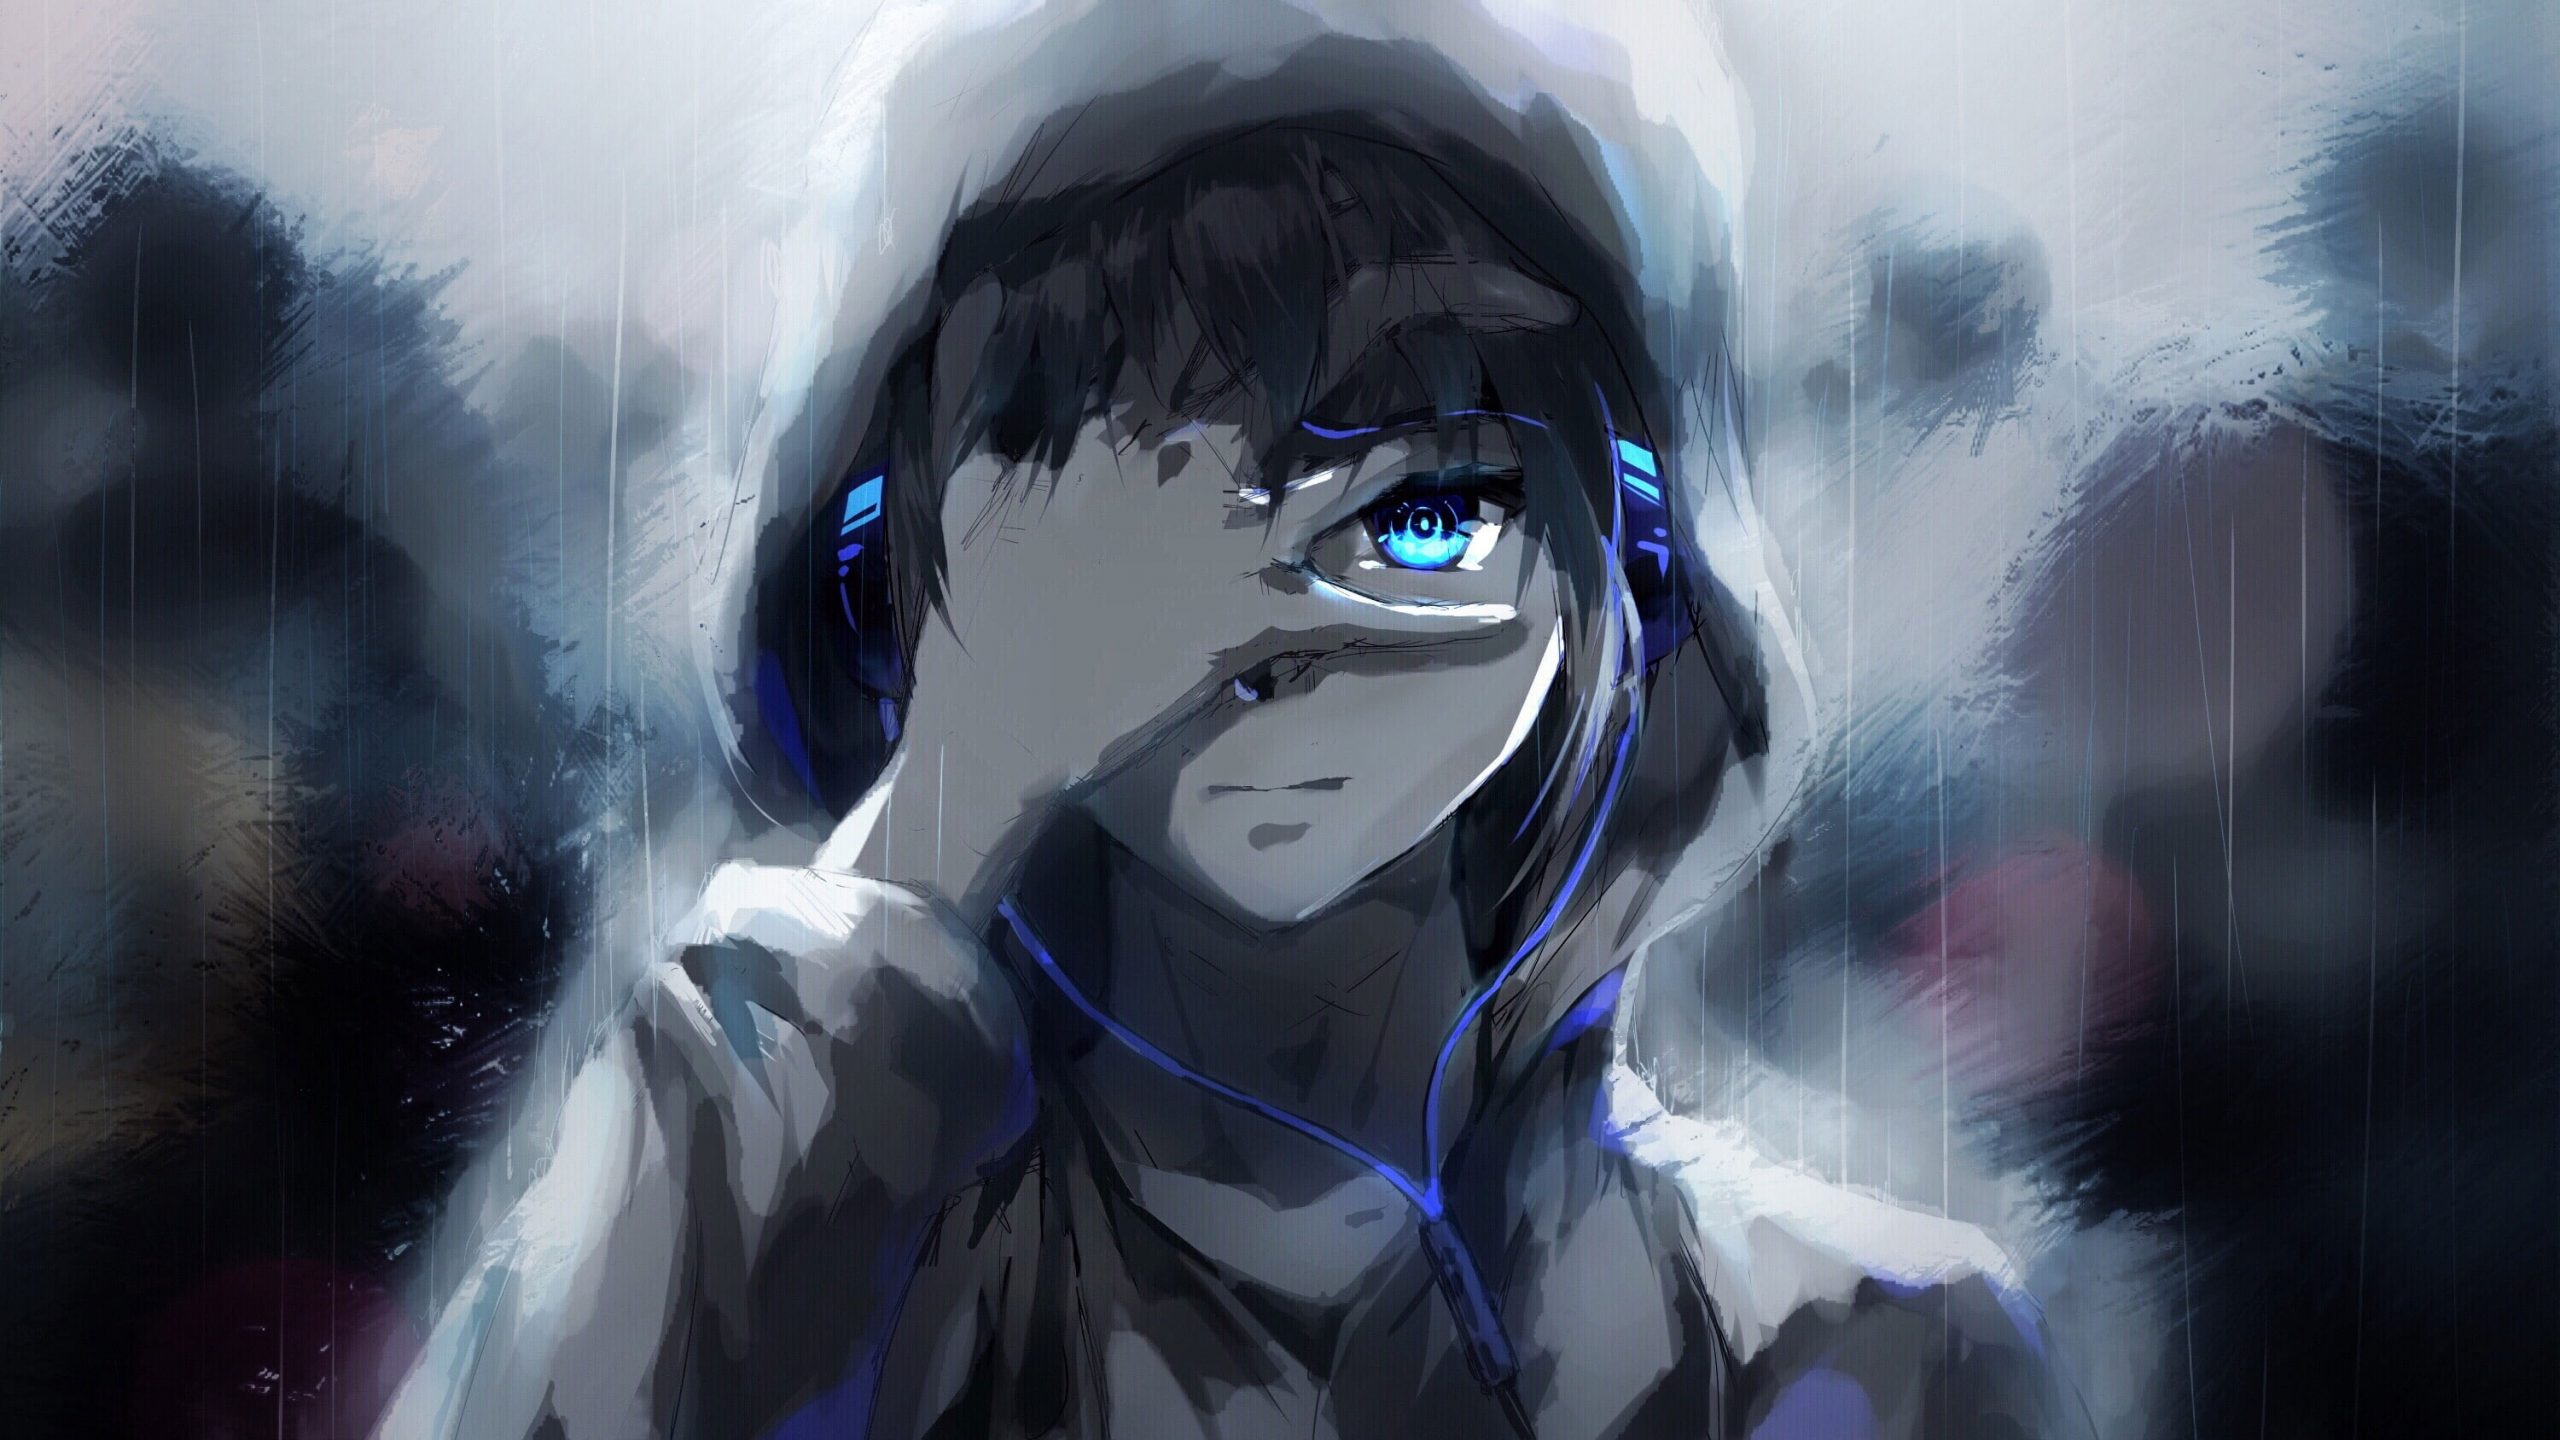 Anime boy wallpaper, hoodie, blue eyes, headphones, painting • Wallpaper For You HD Wallpaper For Desktop & Mobile